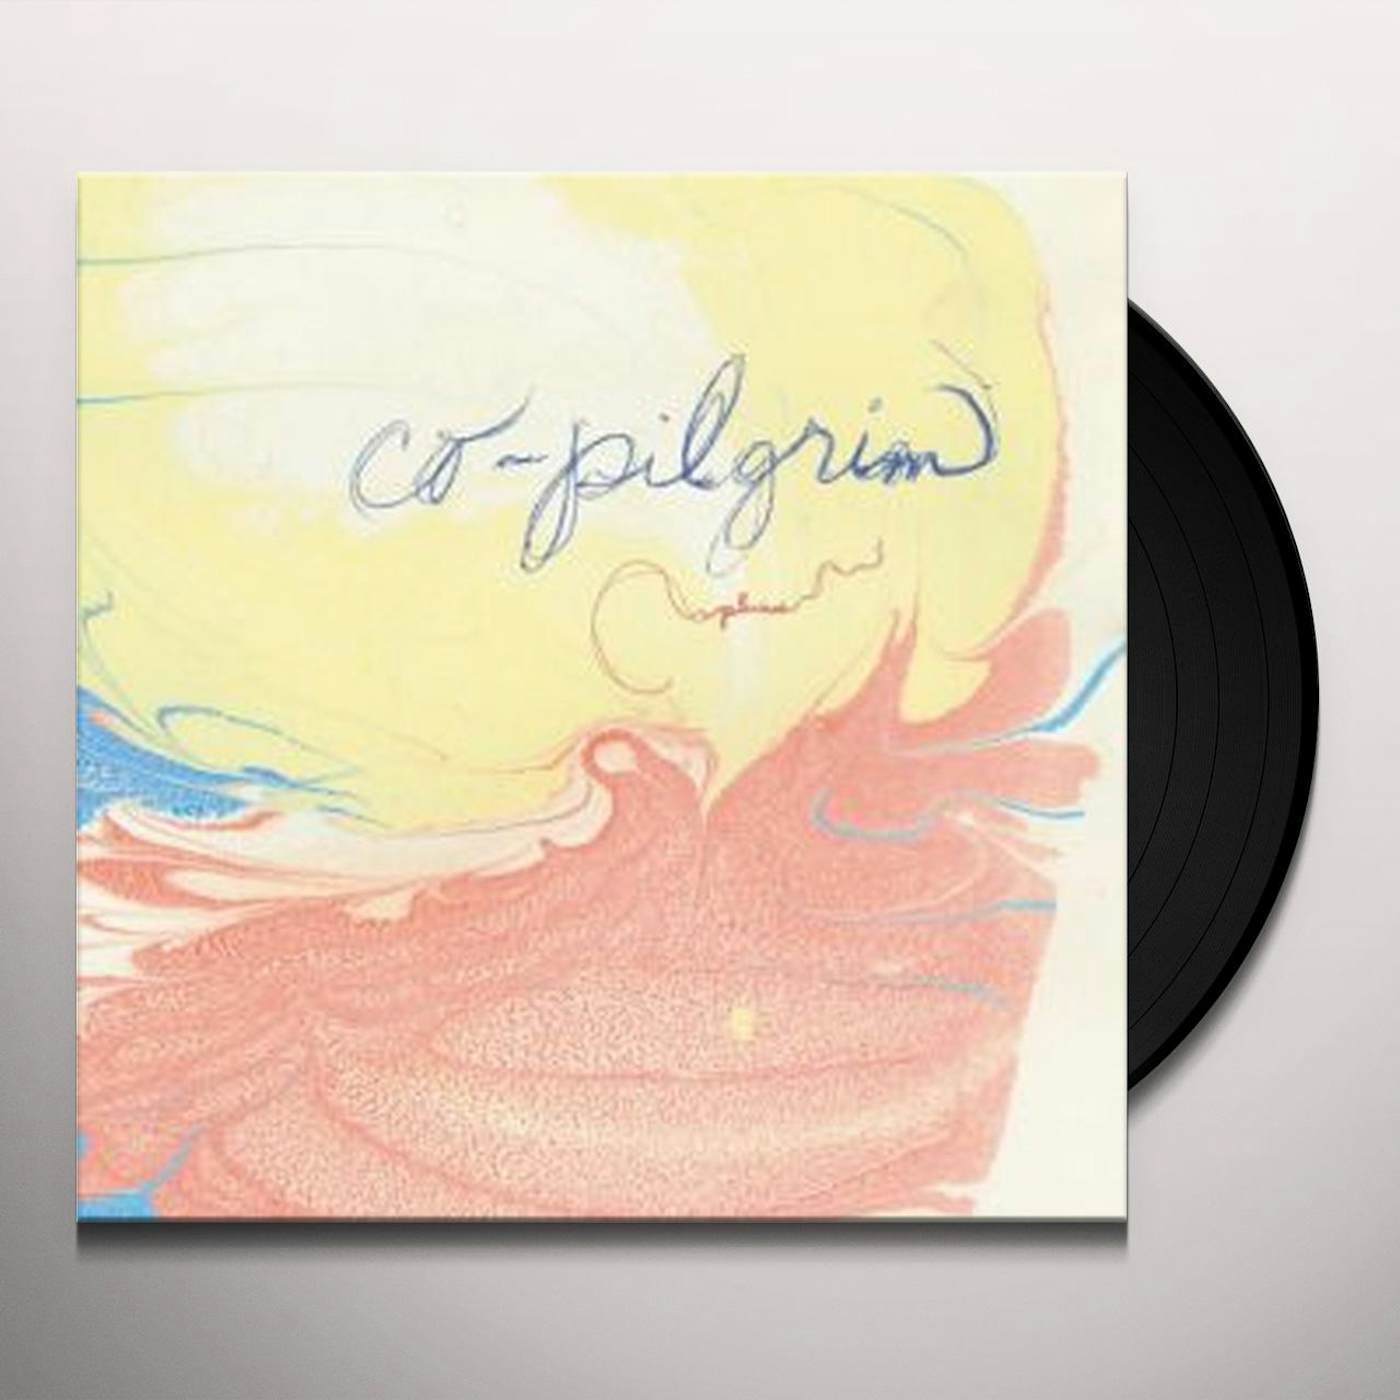 Co-pilgrim Plumes Vinyl Record